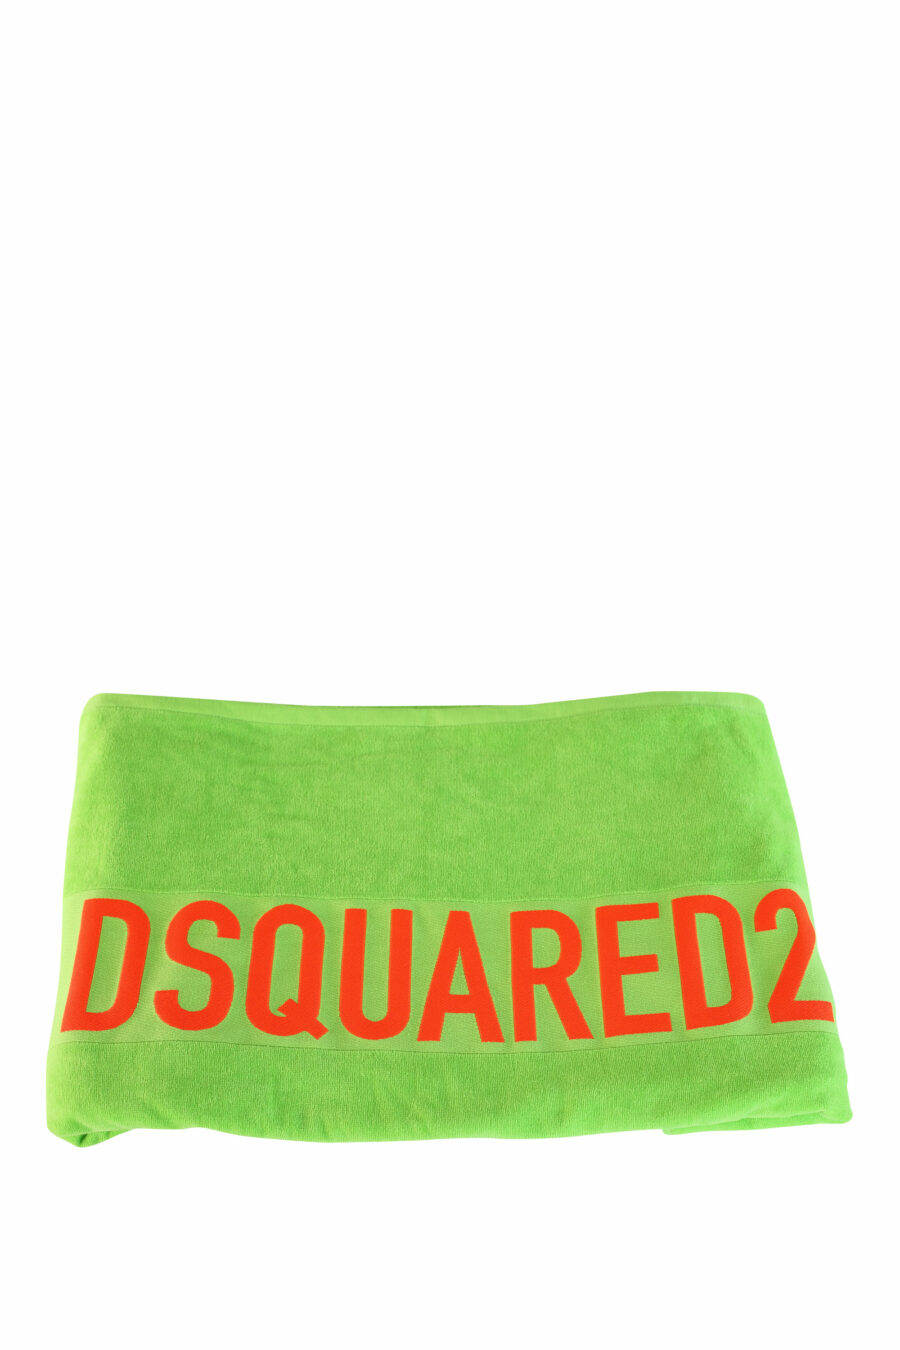 Green towel with orange maxilogo - IMG 1025